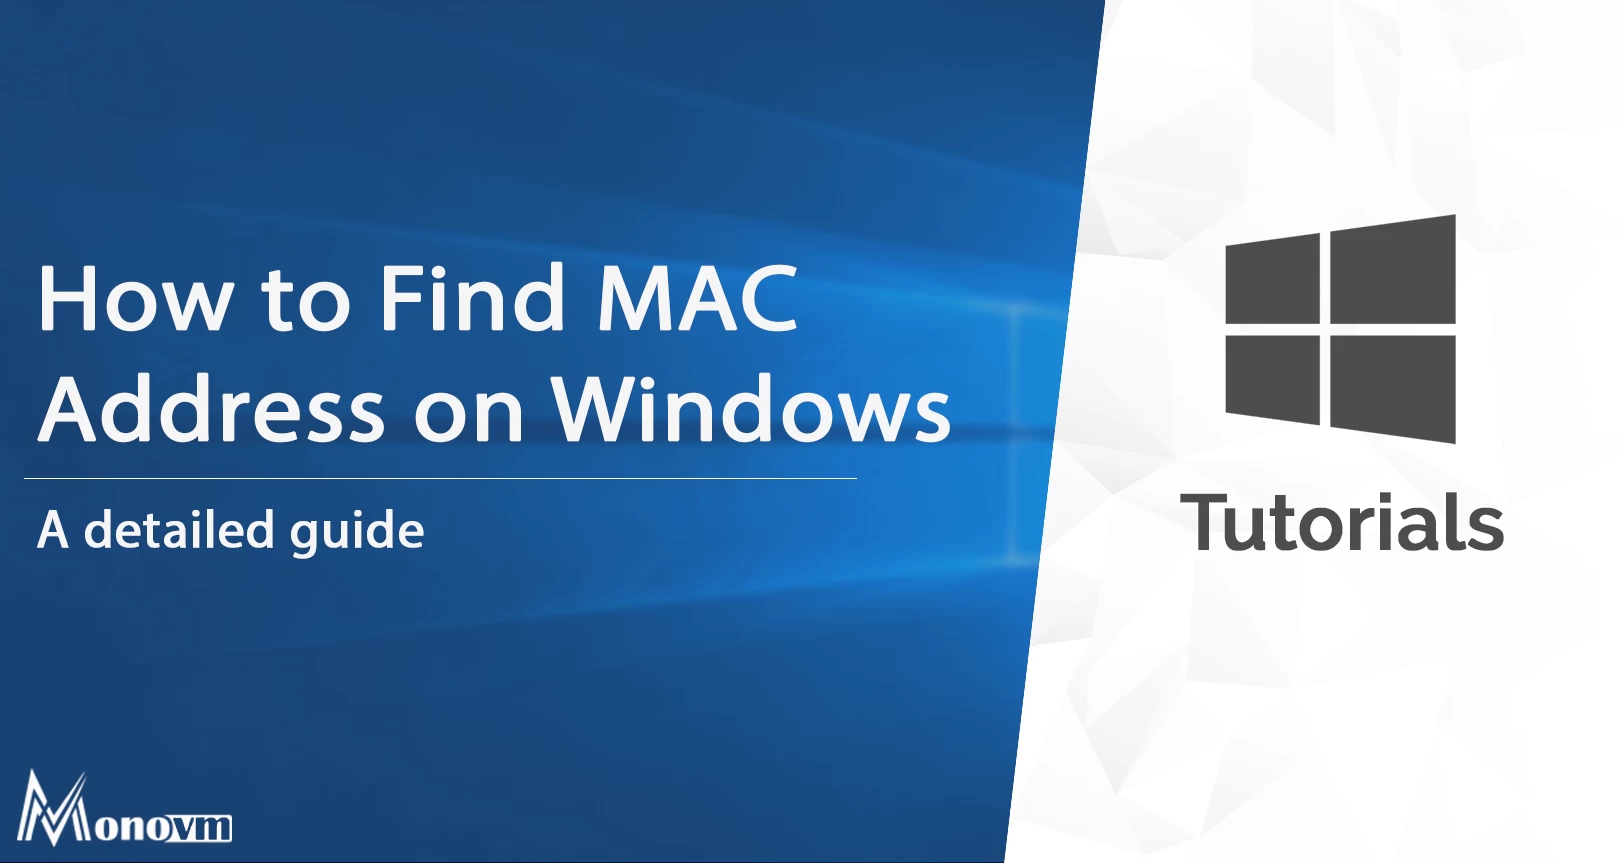 How to Find MAC Address on Windows